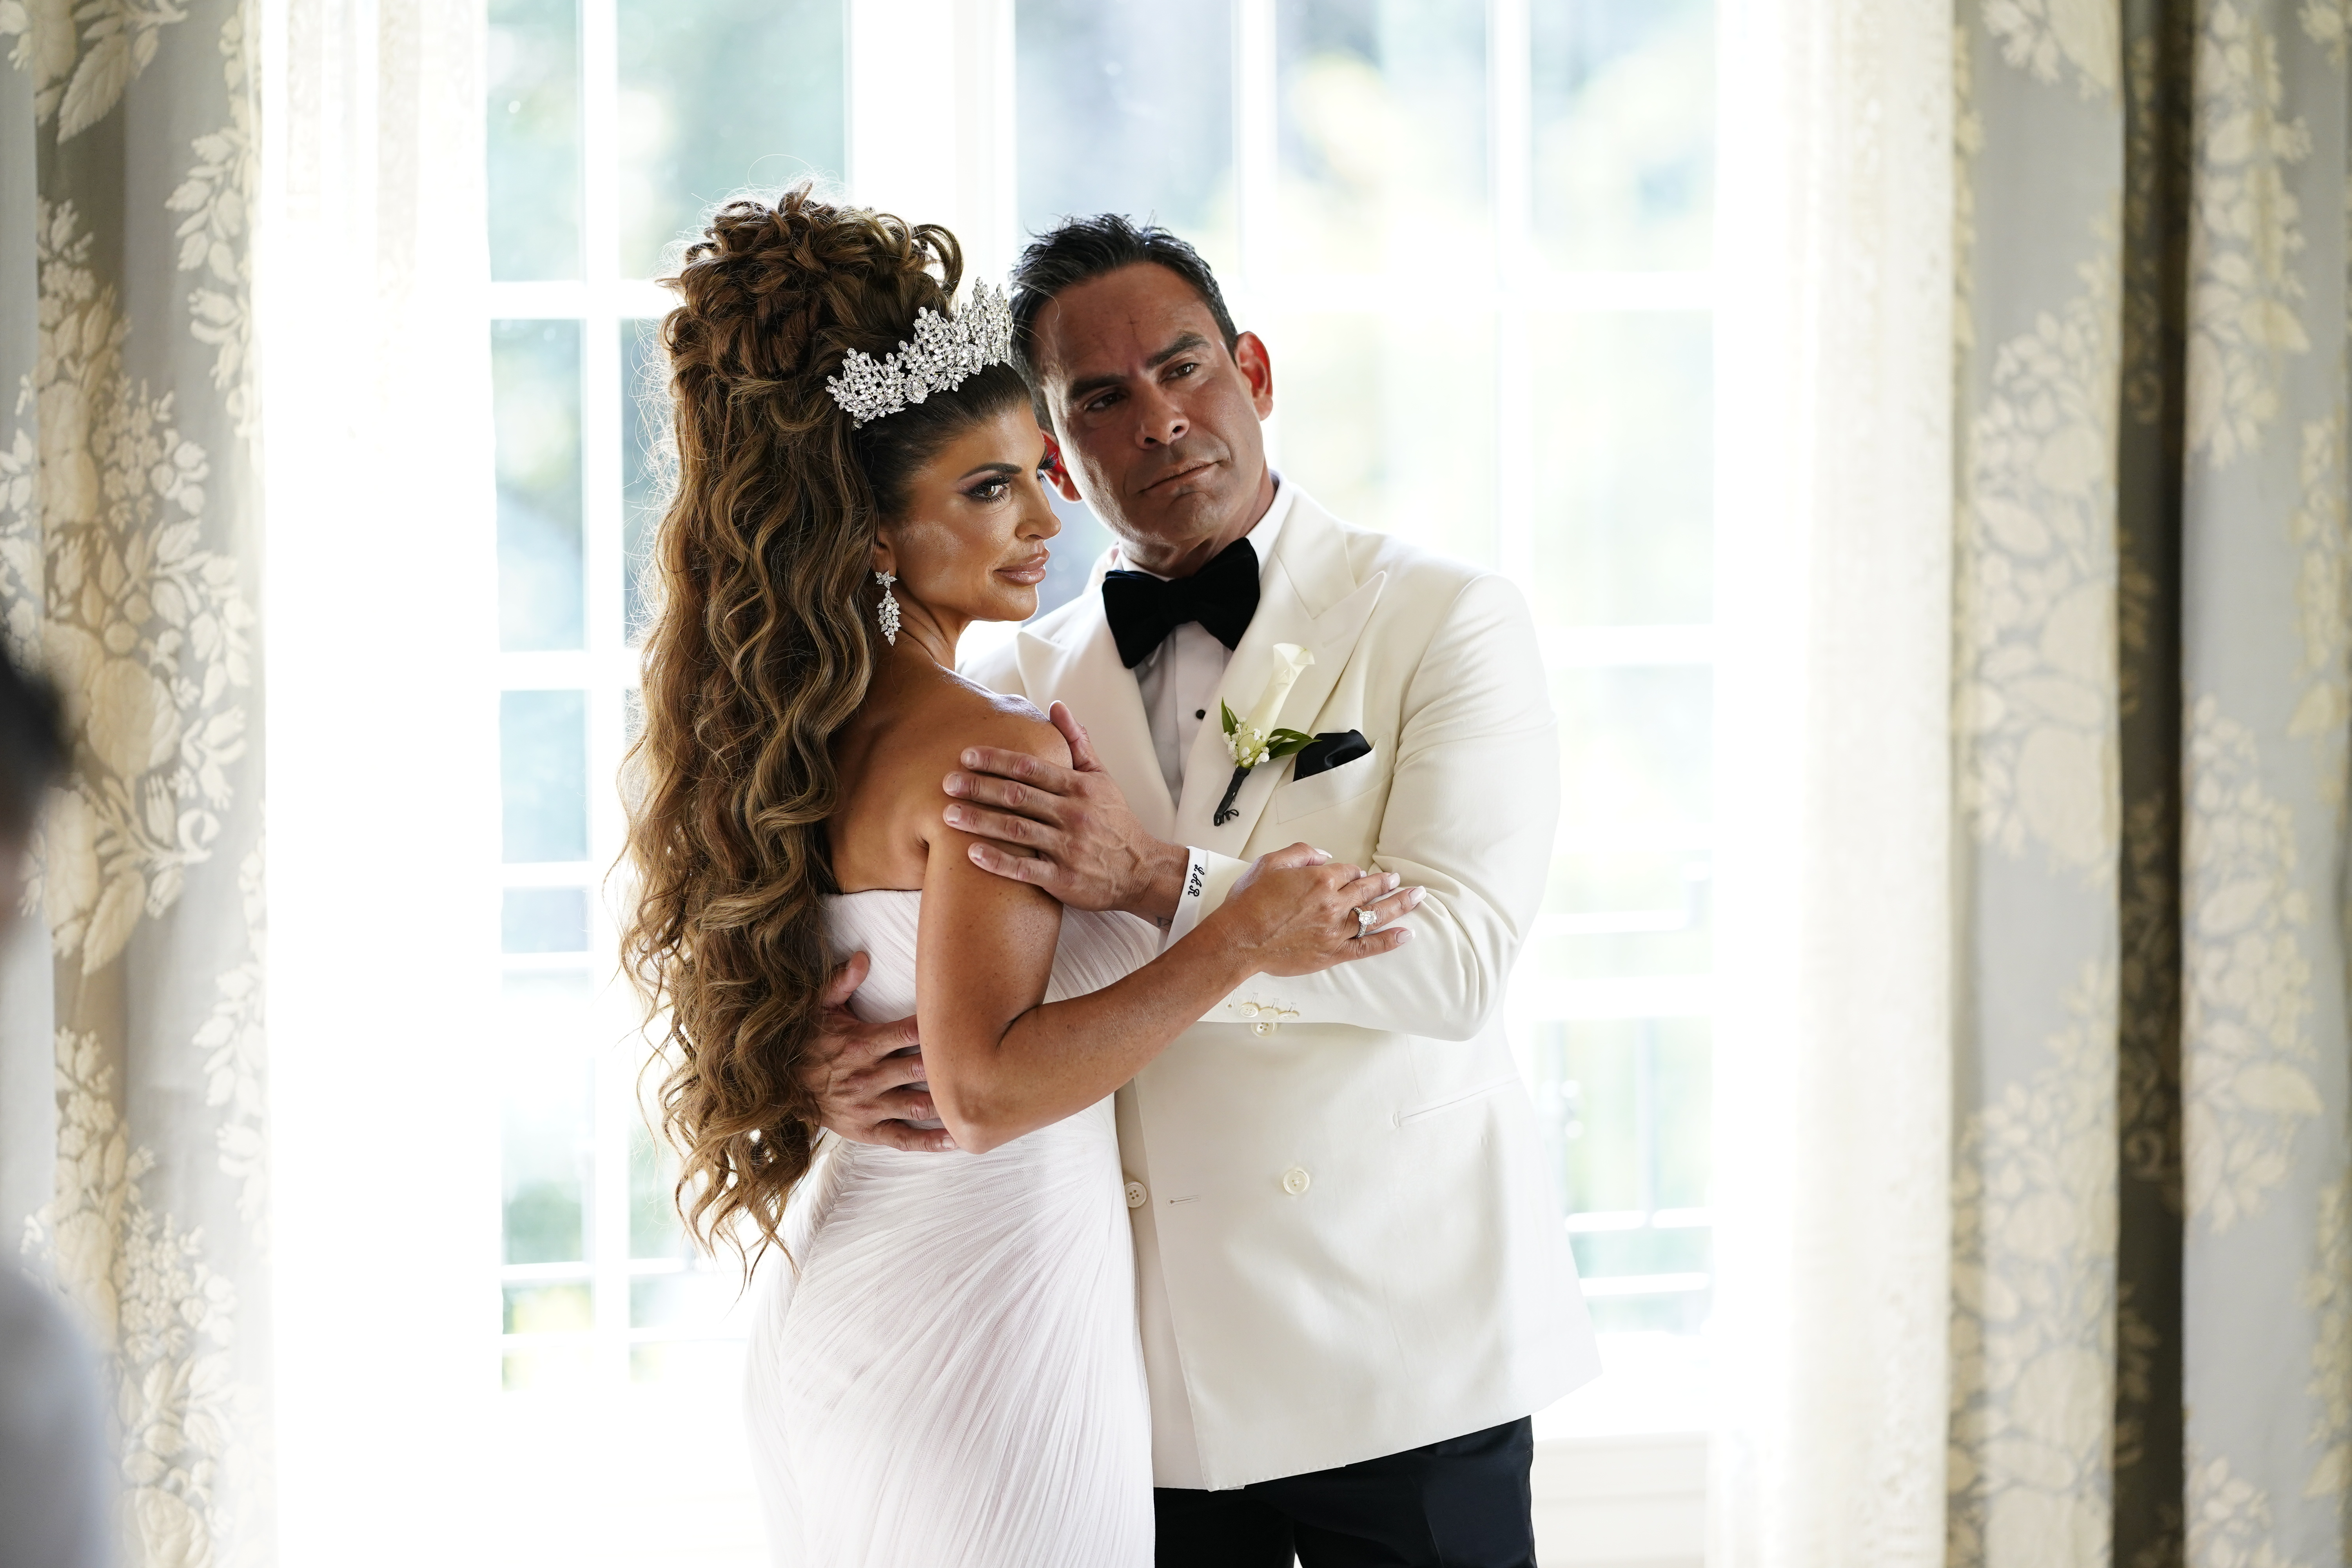 Teresa Giudice and Luis Ruelas on their wedding day.